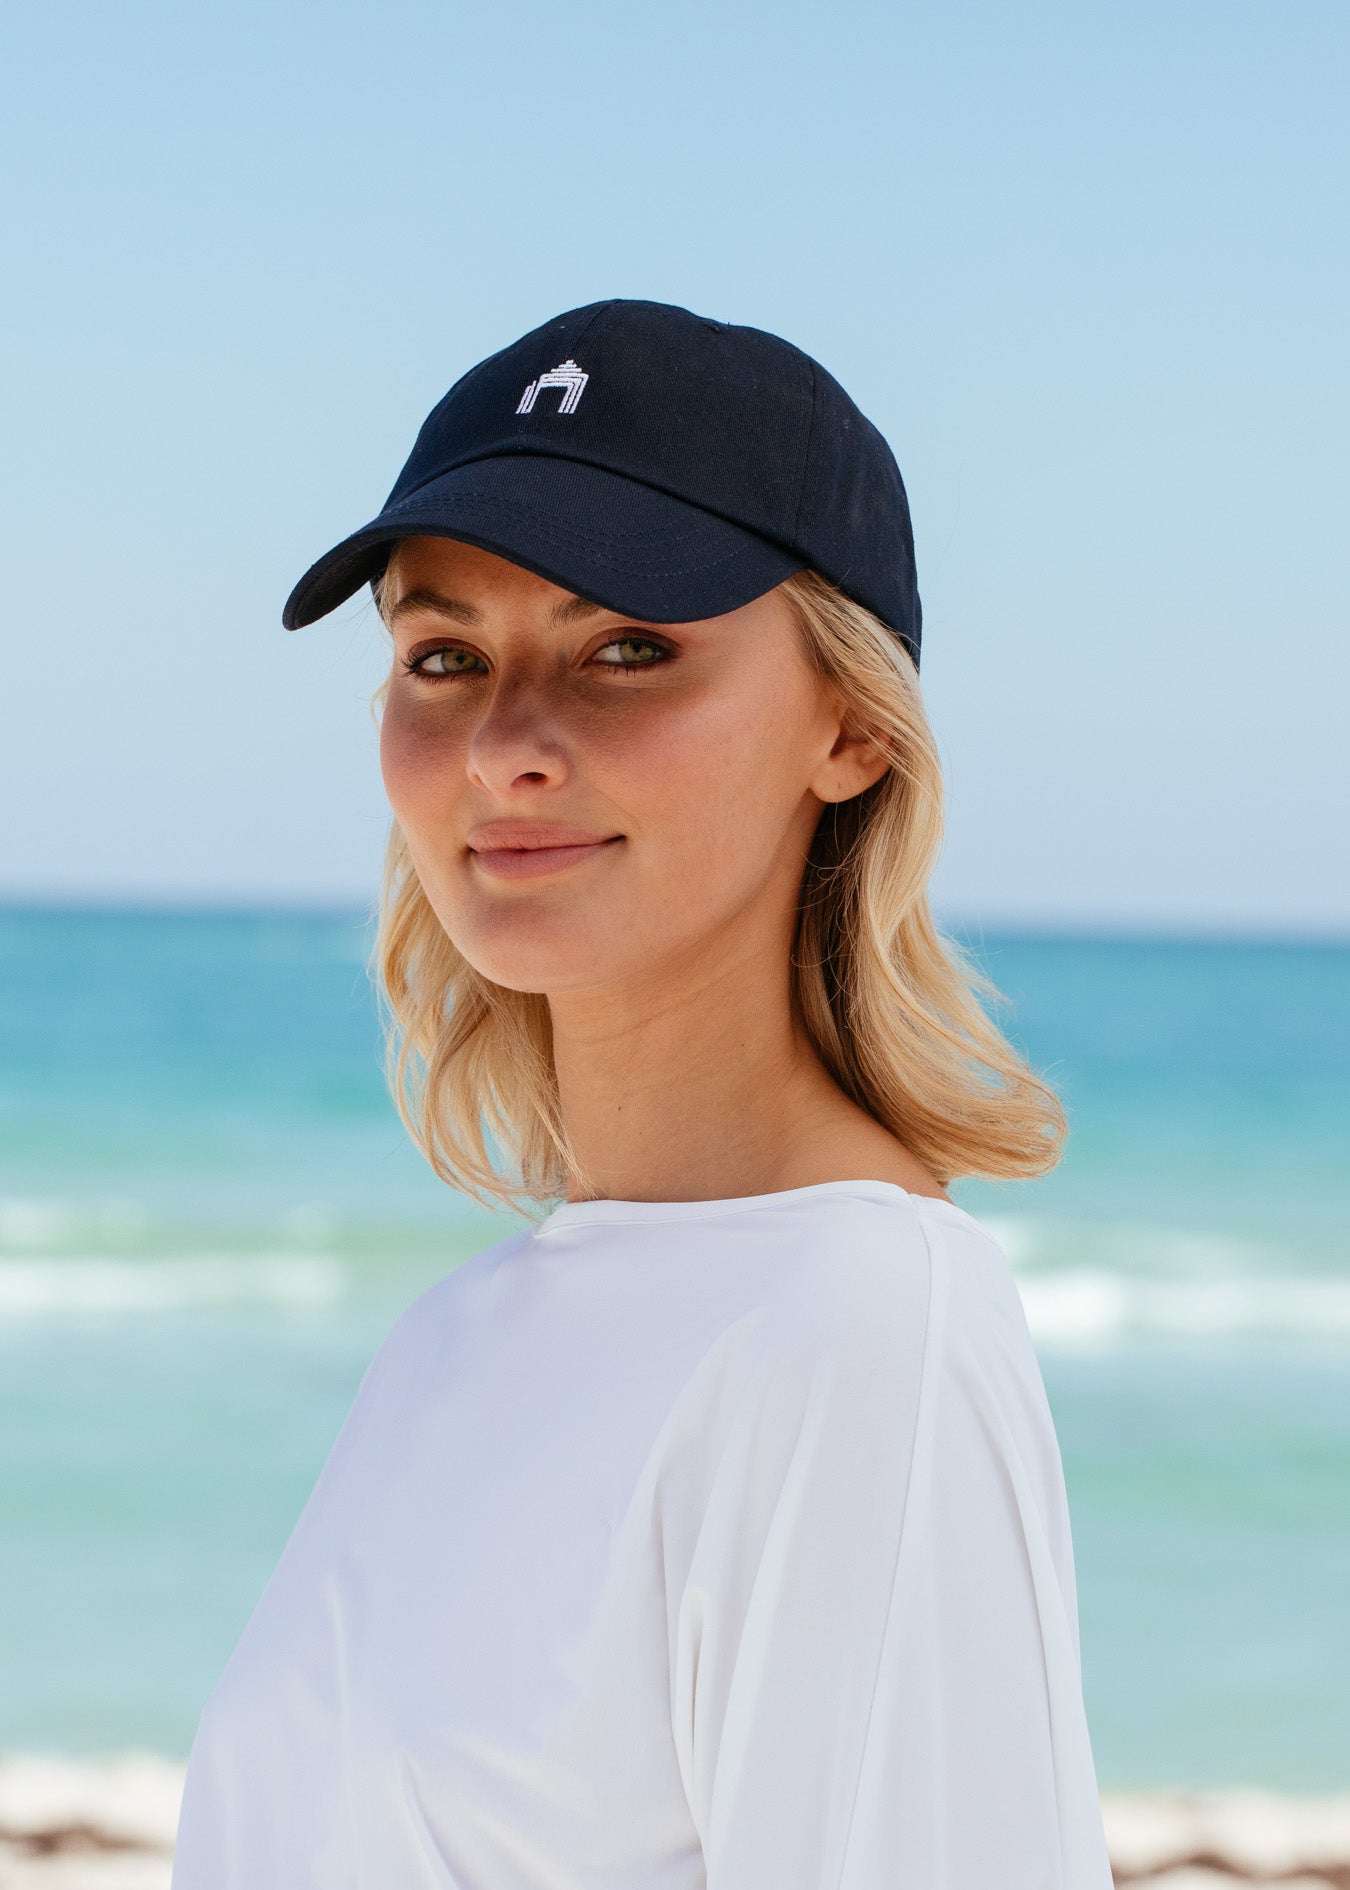 Blonde woman wearing Navy Cabana Life Baseball Hat with white rashguard on beach.